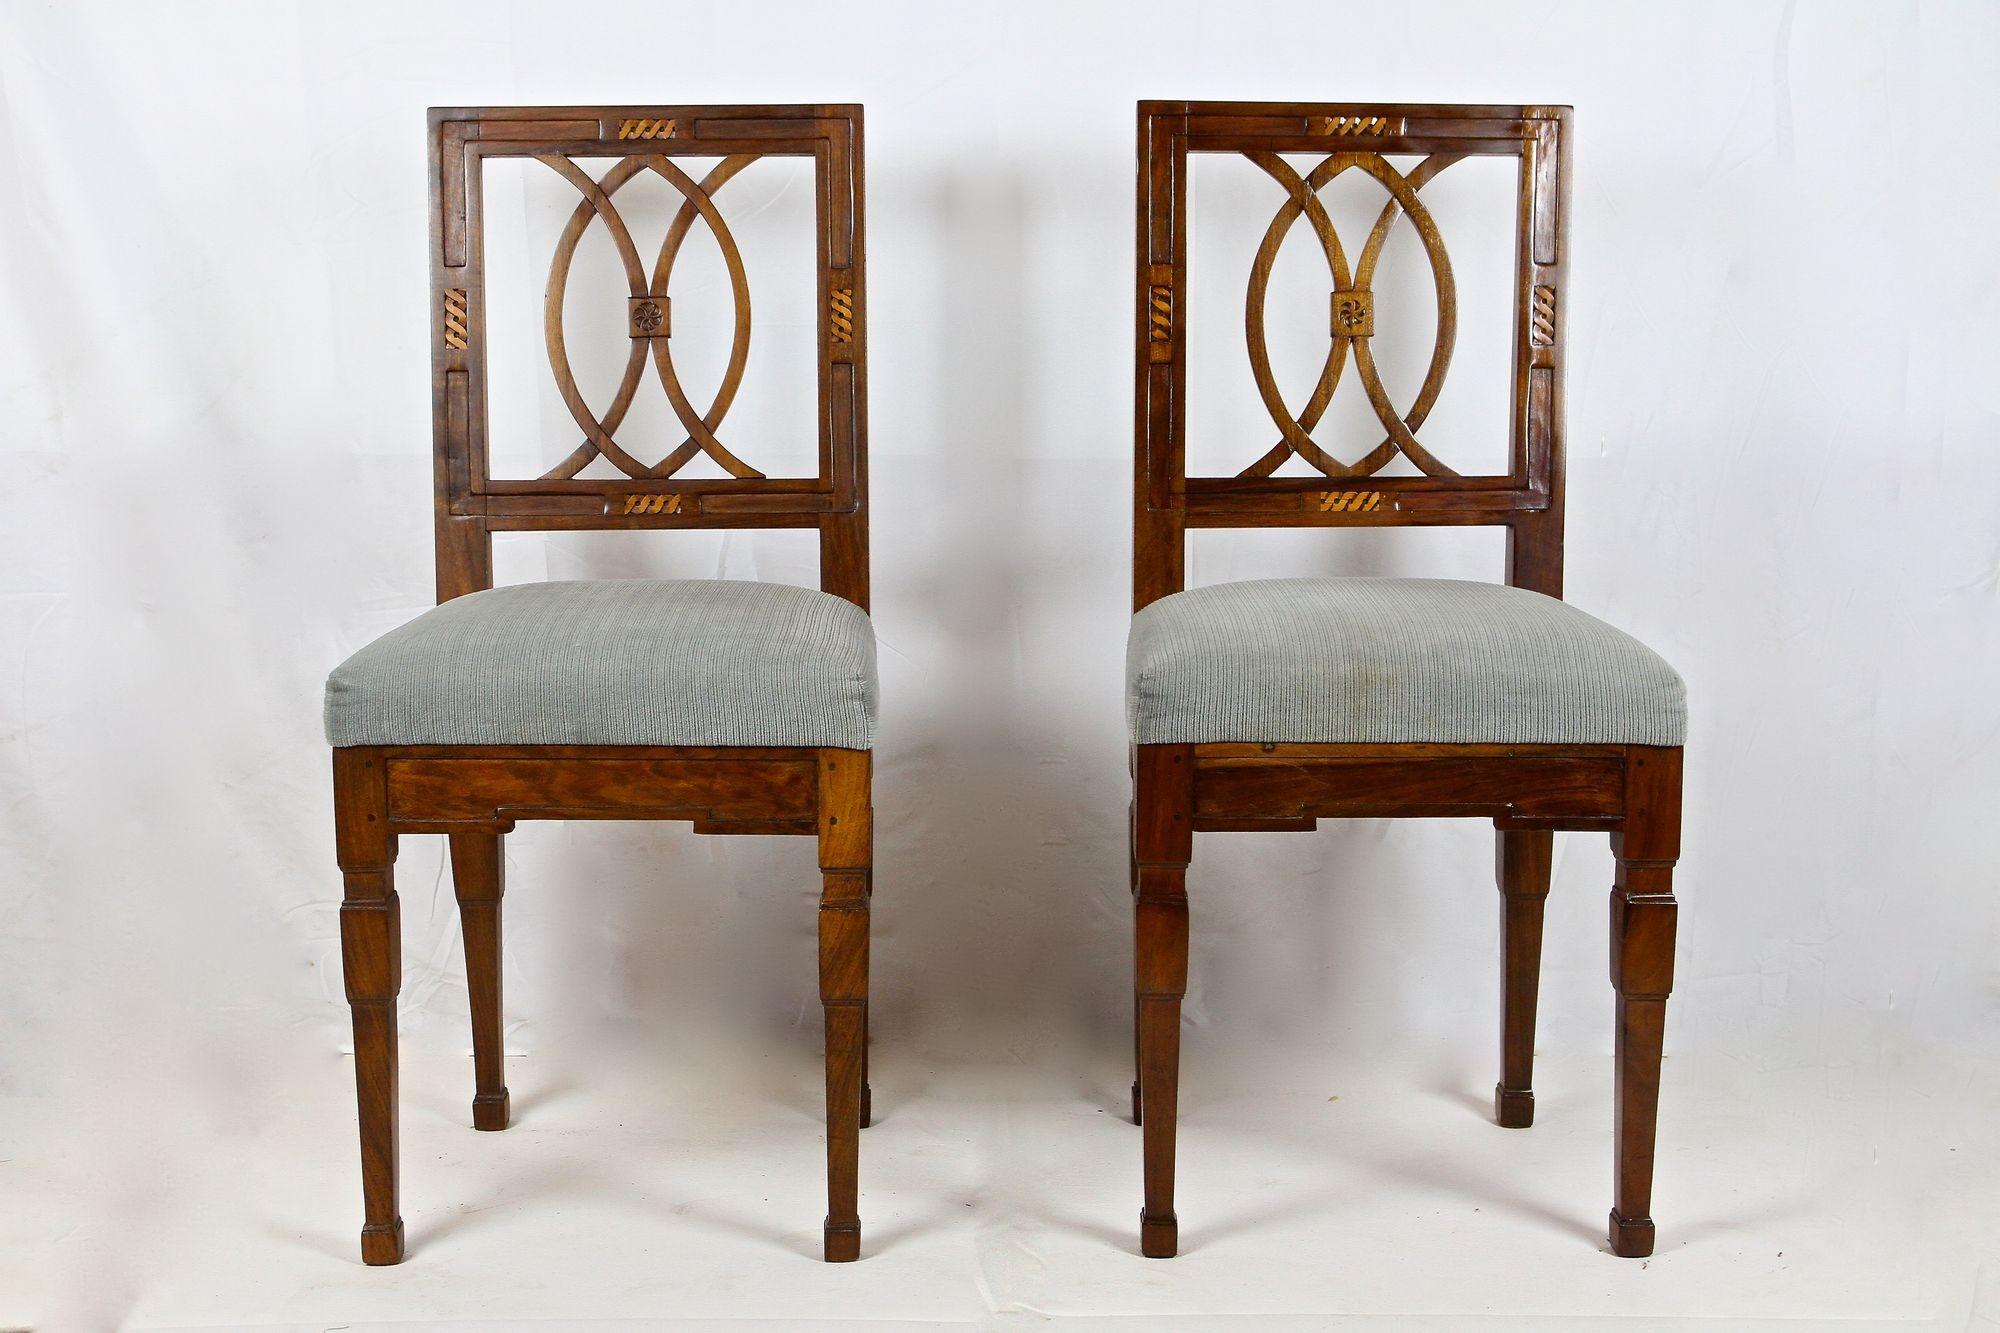 Austrian Pair of 18th Century Nutwood Chairs, Josephinism Period, Austria, Circa 1790